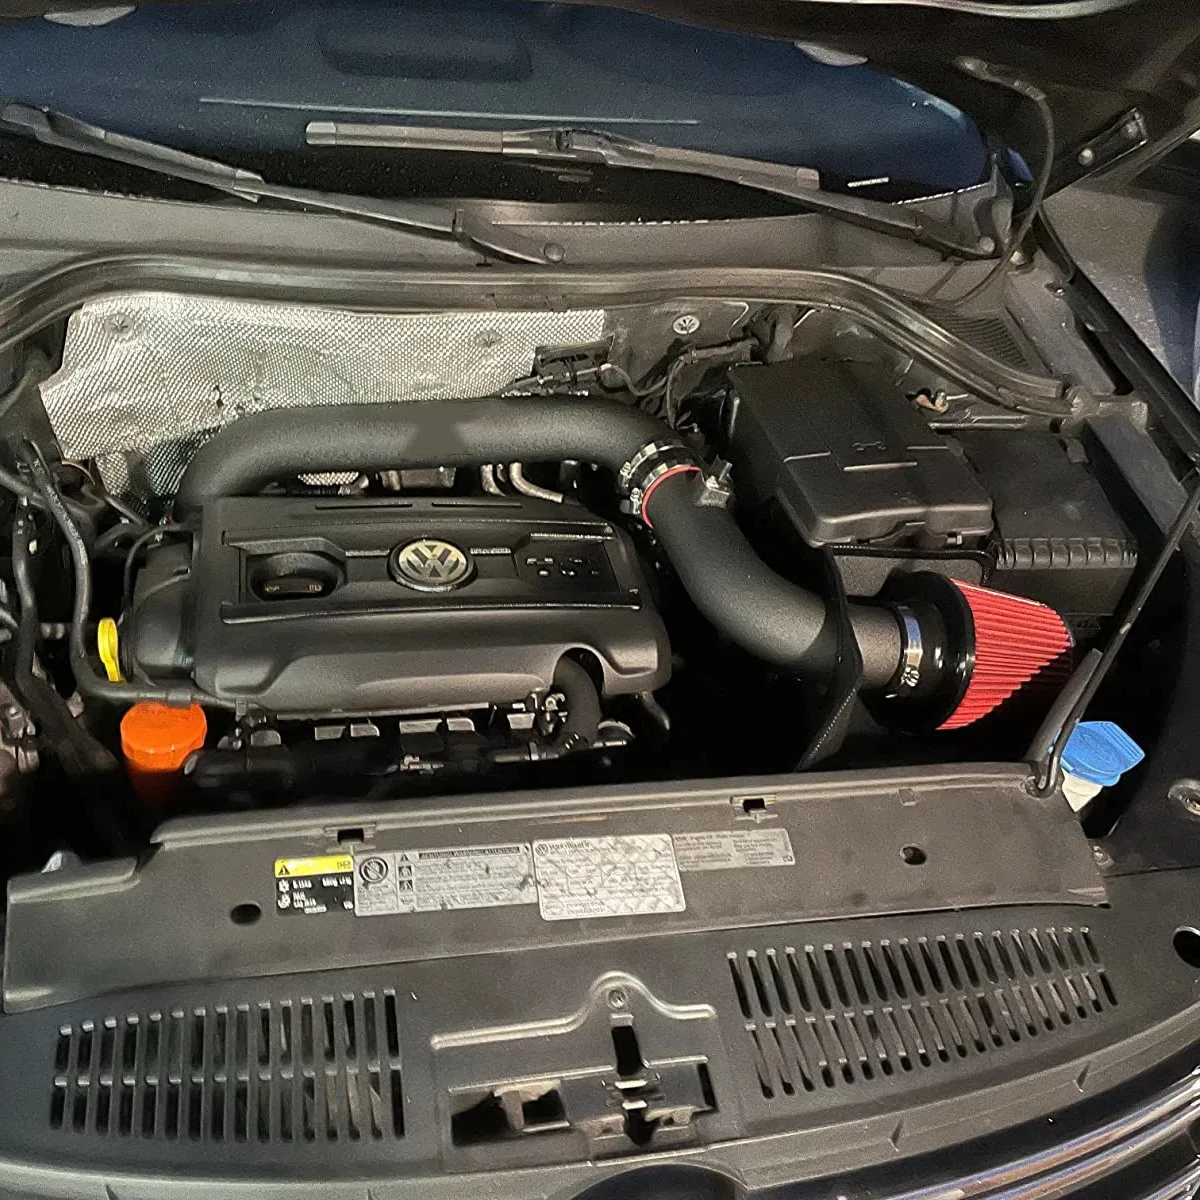 

KYOSTAR 3'' for VW Passat CC Car Cool Air Intake Kit Fit VW MK6 GTI Cold Air Intake System 2.0 TSI Turbo